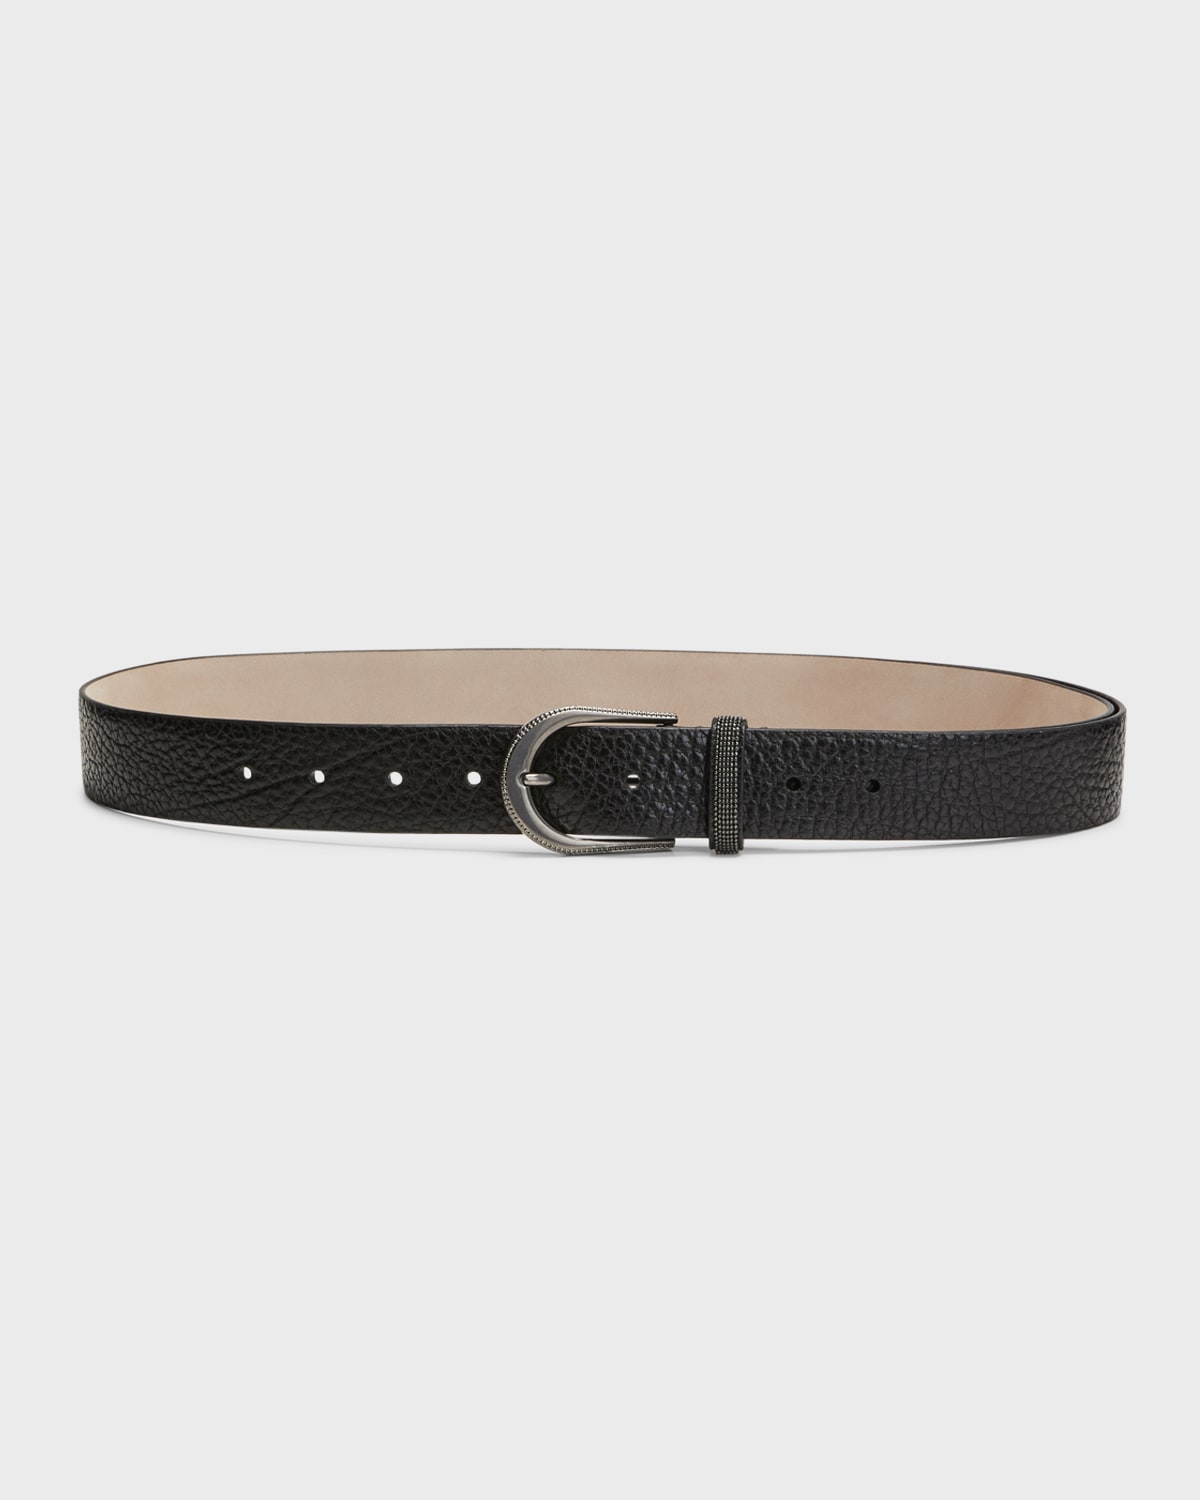 Brunello Cucinelli Textured Leather Belt With Monili Belt Loop In C101 Black